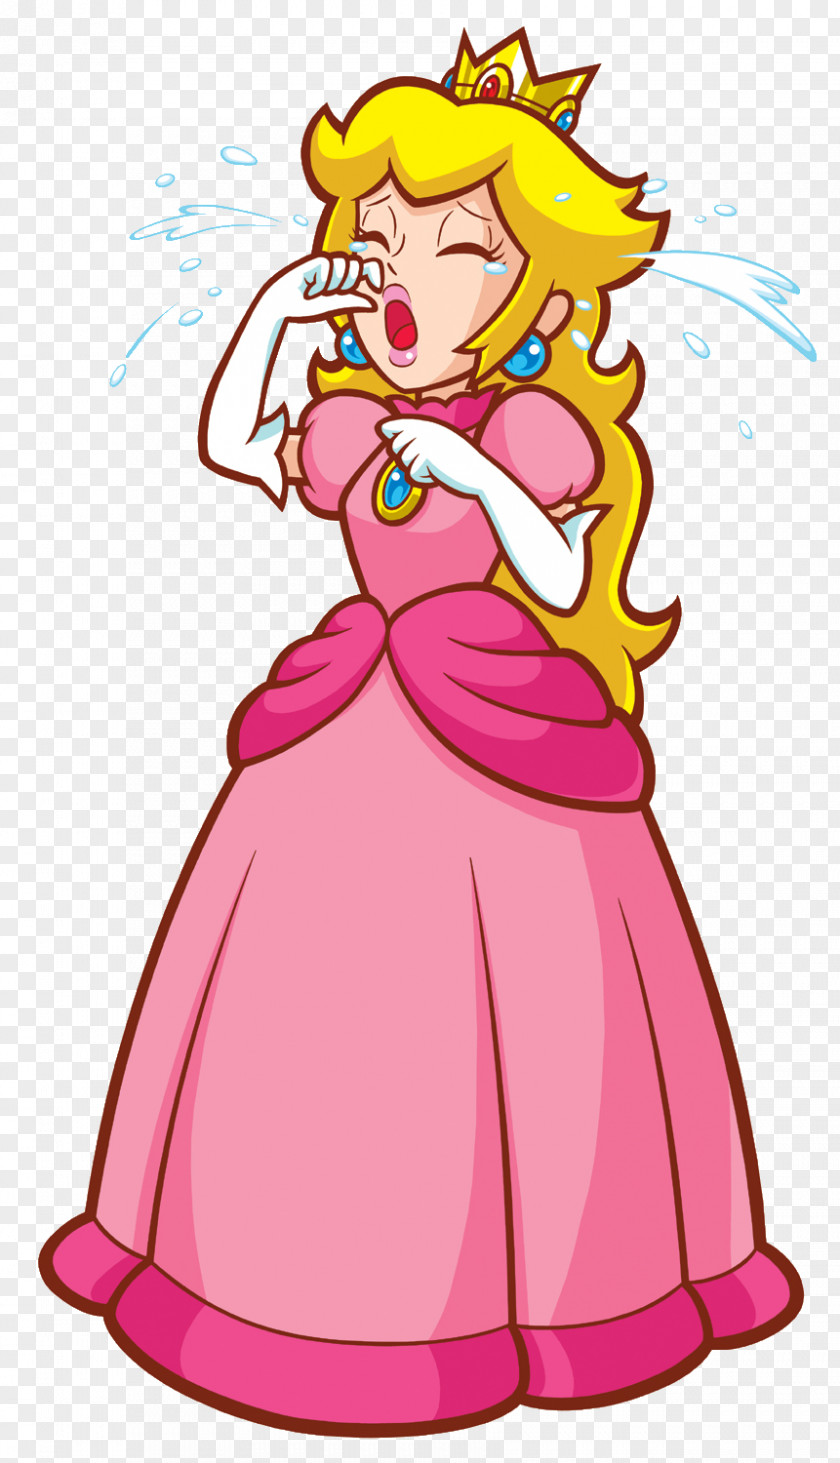 Cry Super Princess Peach New Mario Bros. Wii PNG